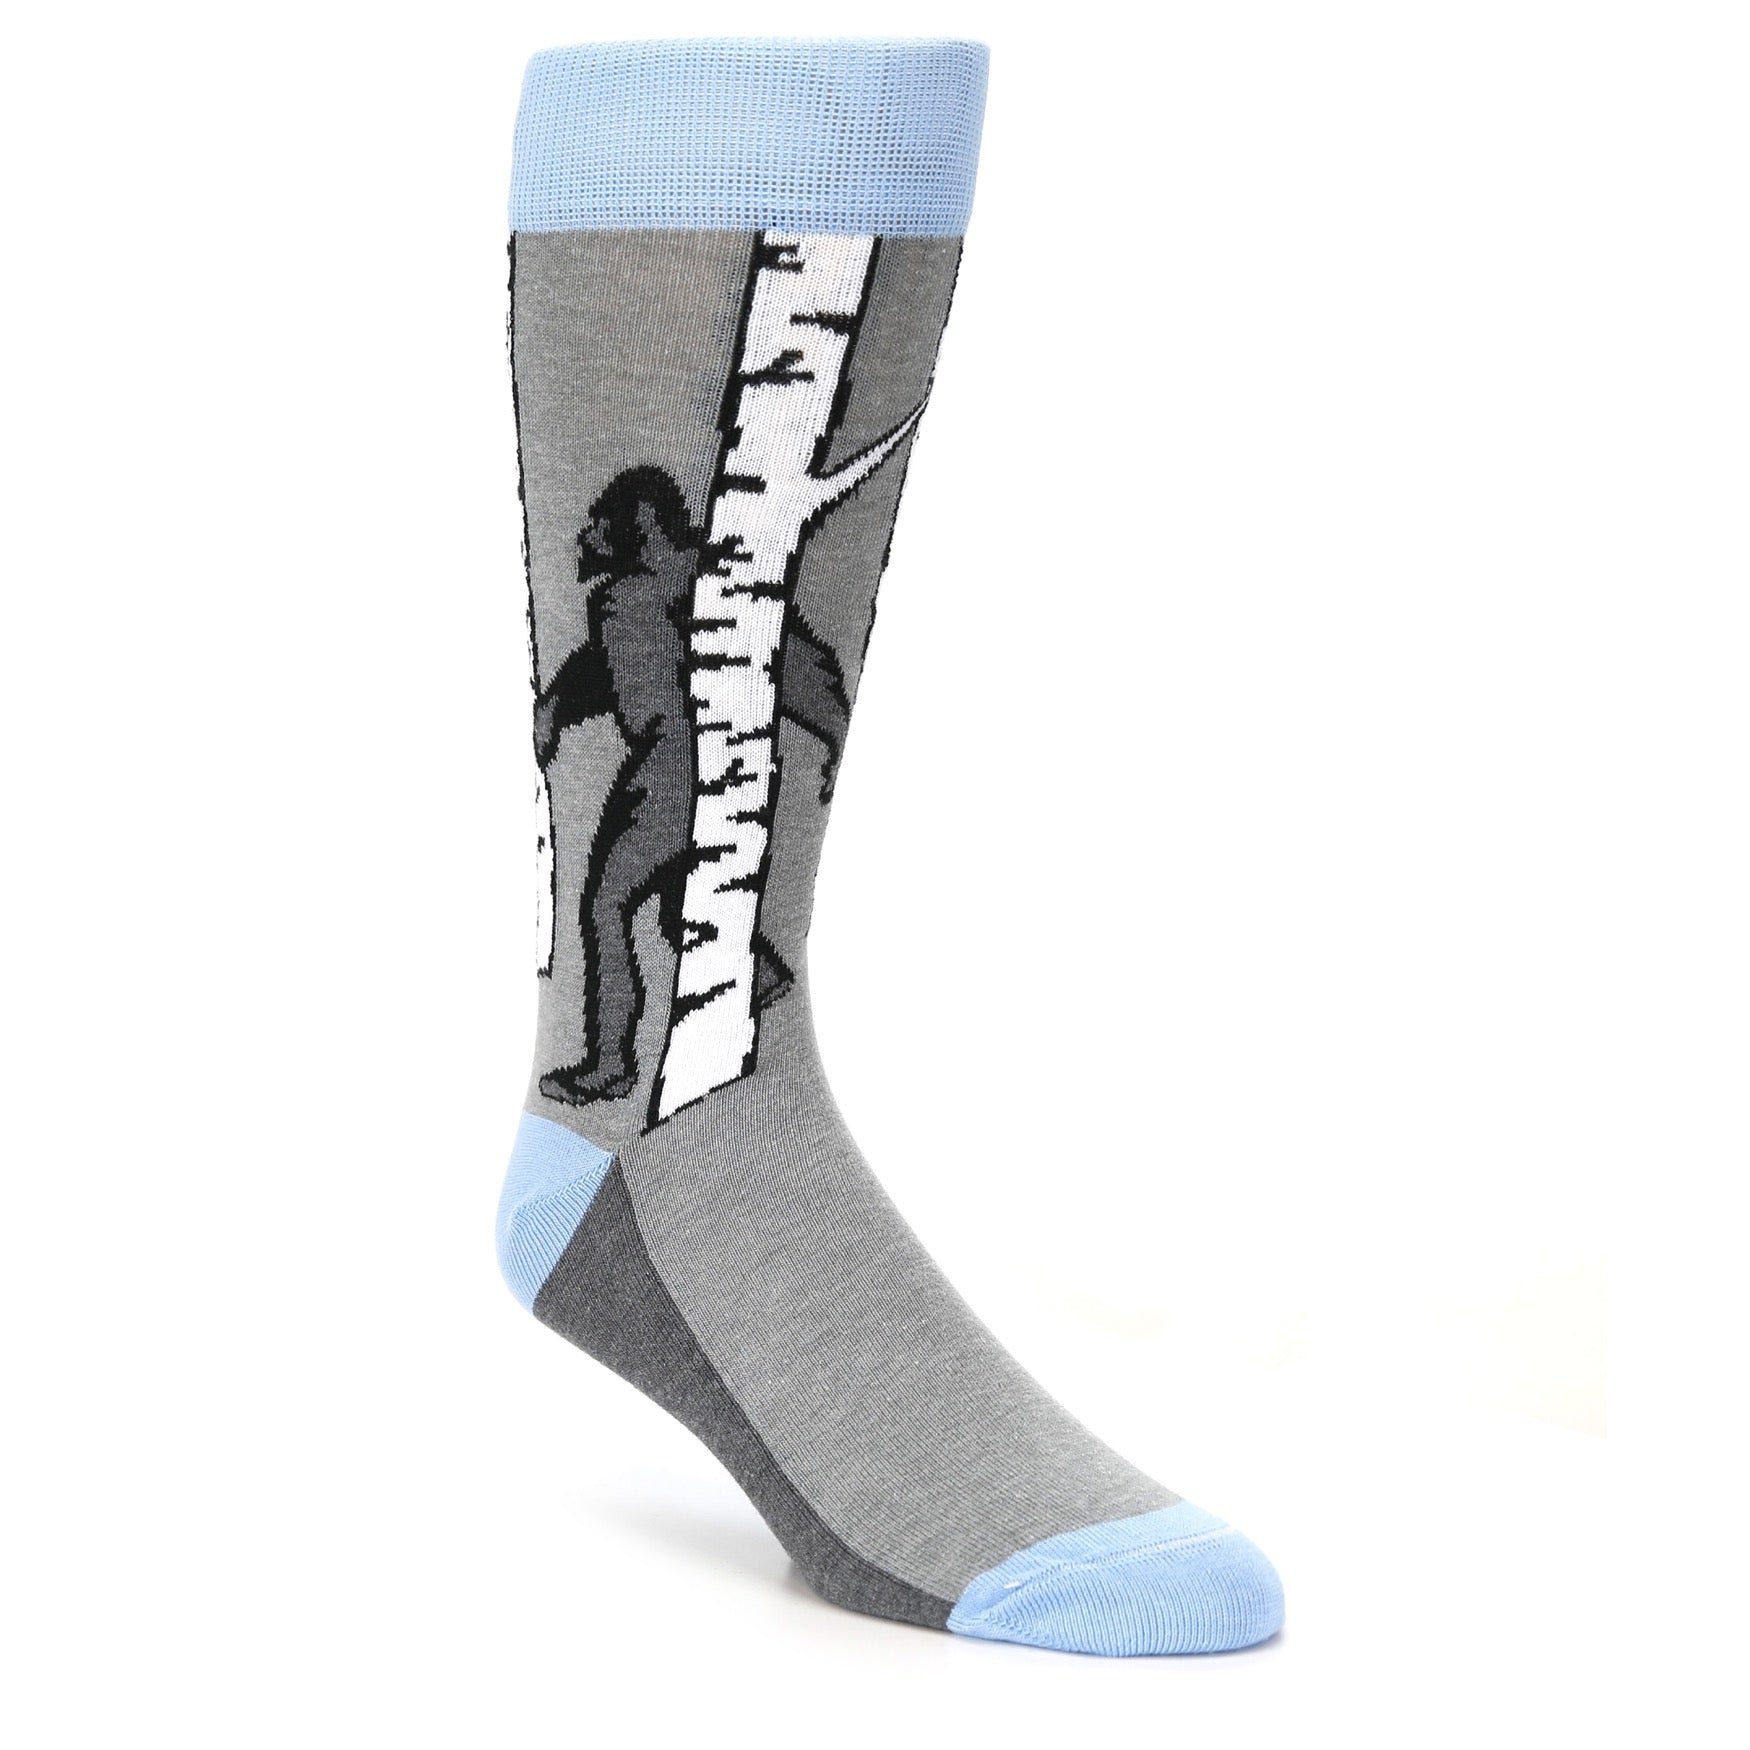 Bigfoot Sasquatch Socks - Made in USA Men's Novelty Dress Socks